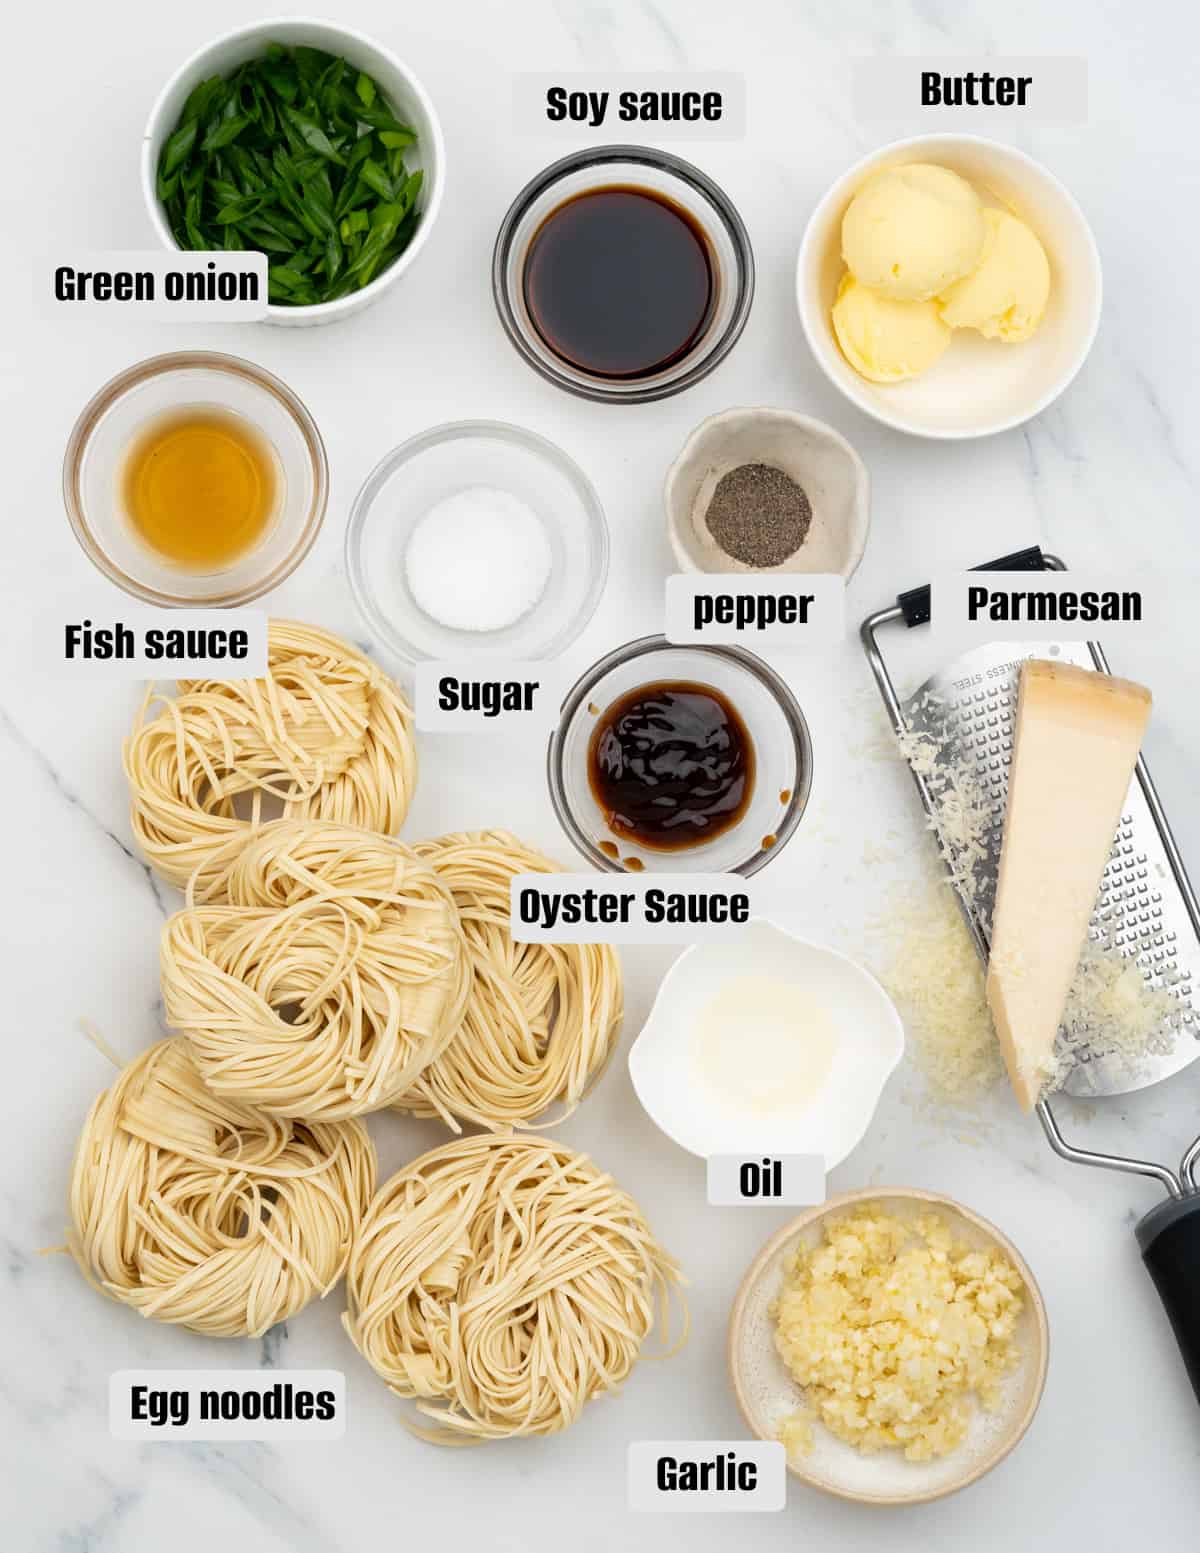 Ingredients for Garlic noodles. 